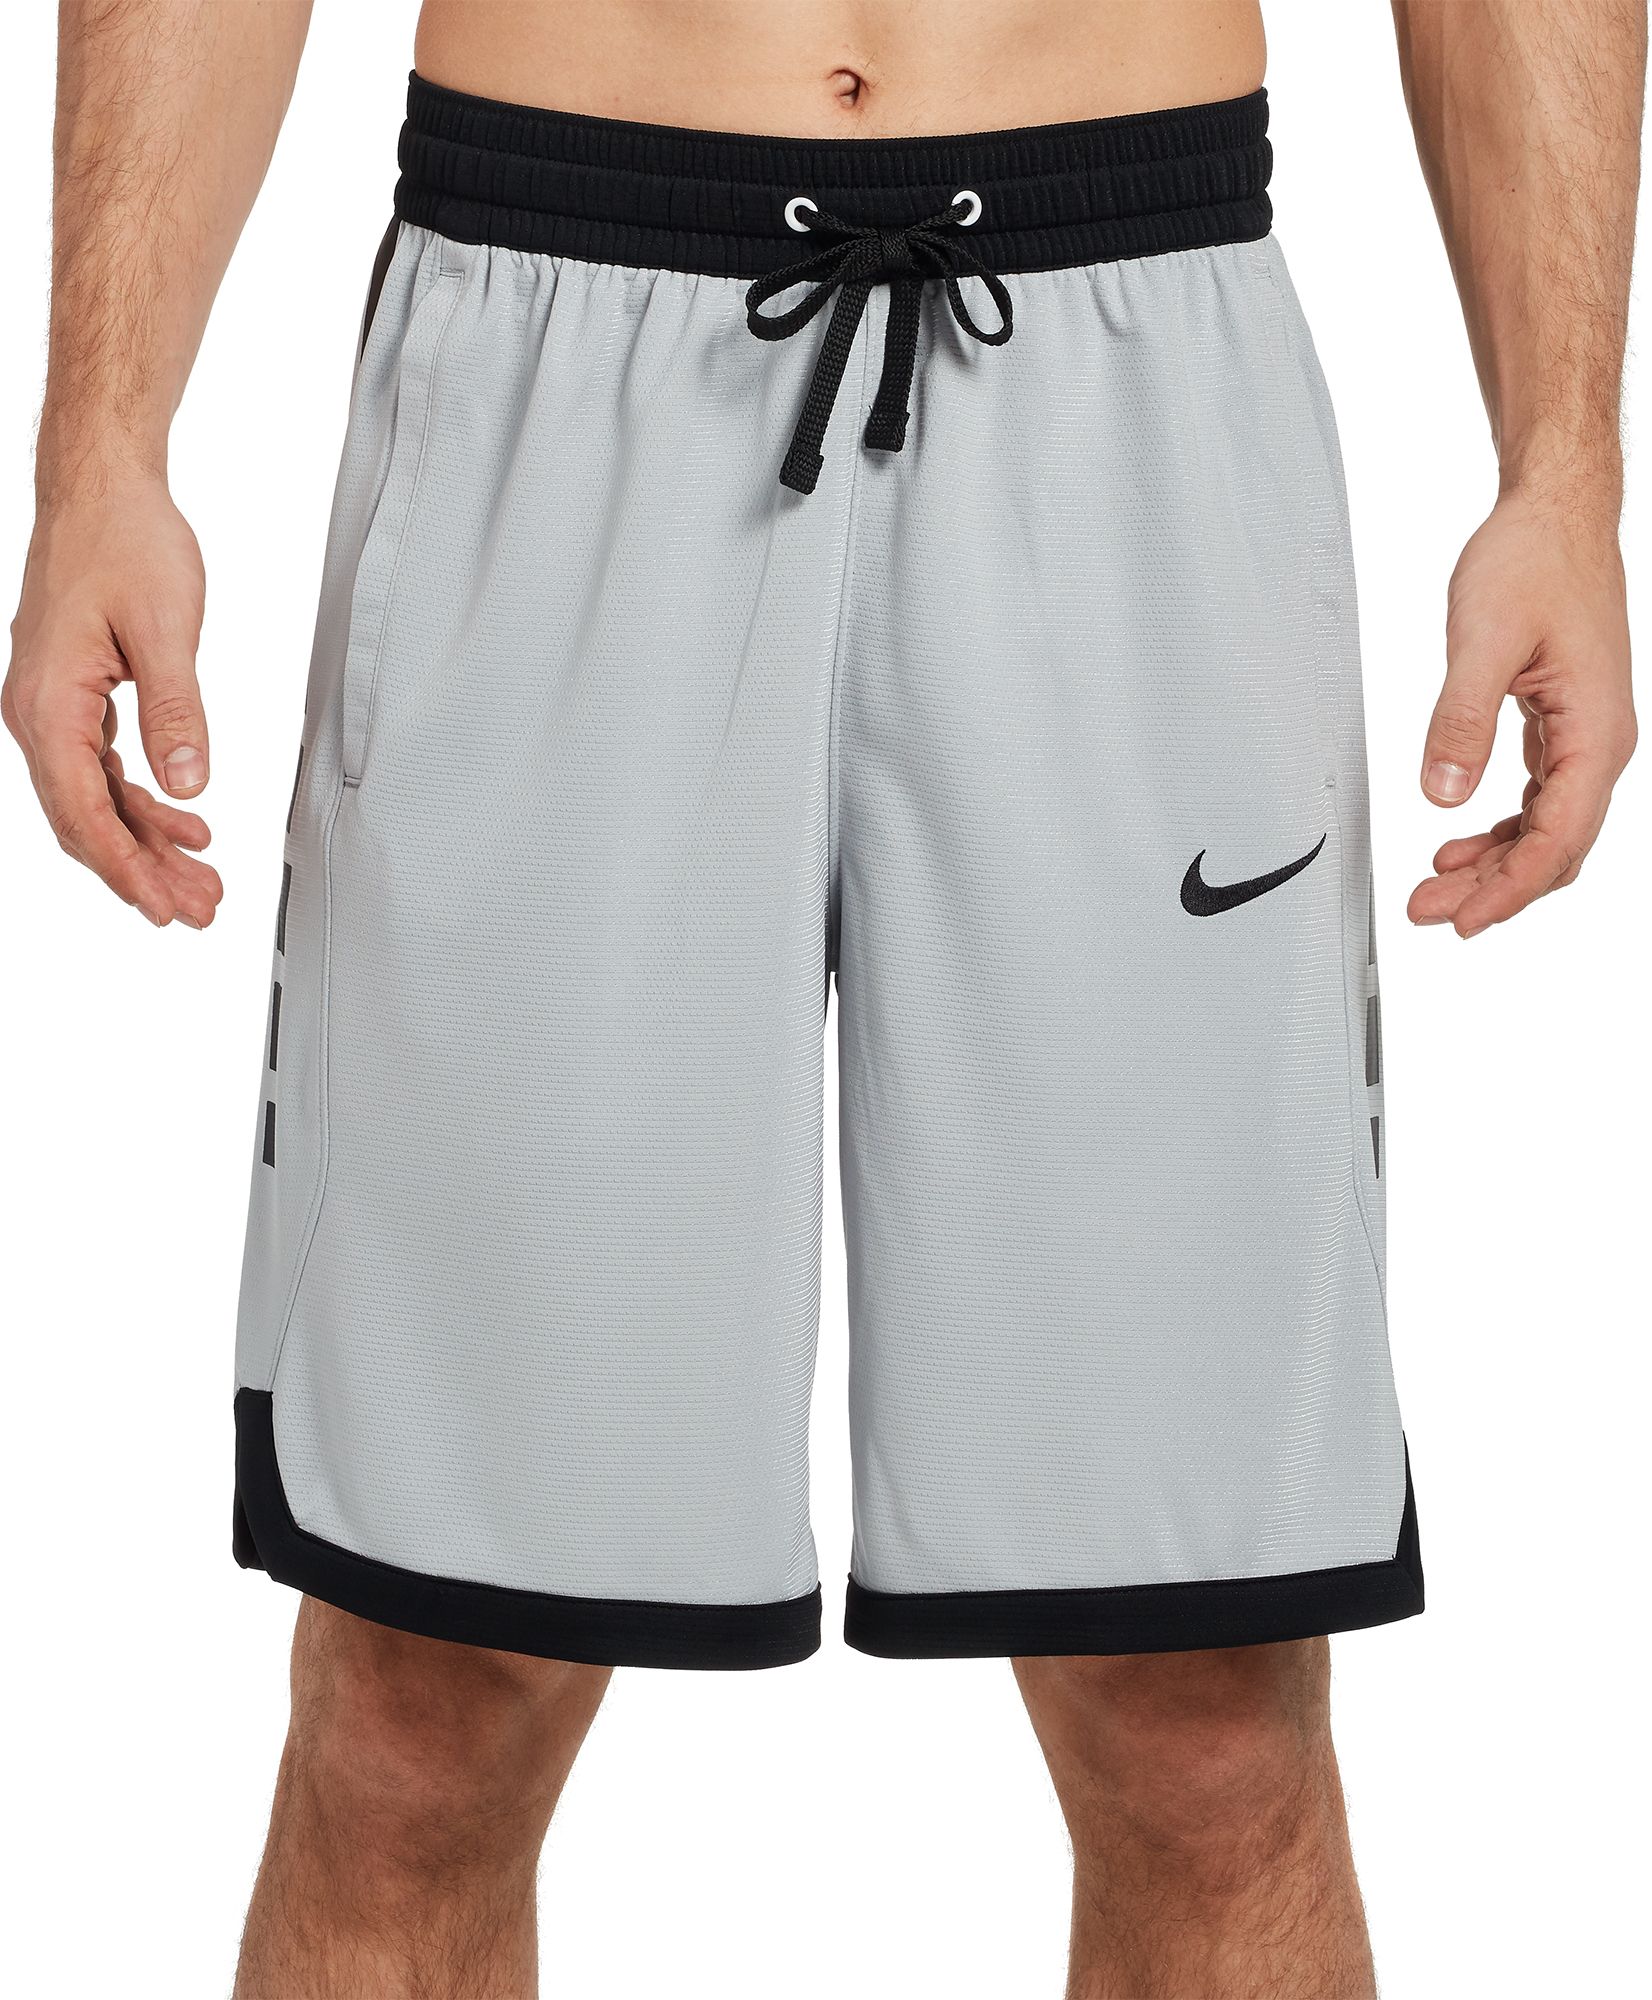 nike men's elite stripe basketball shorts